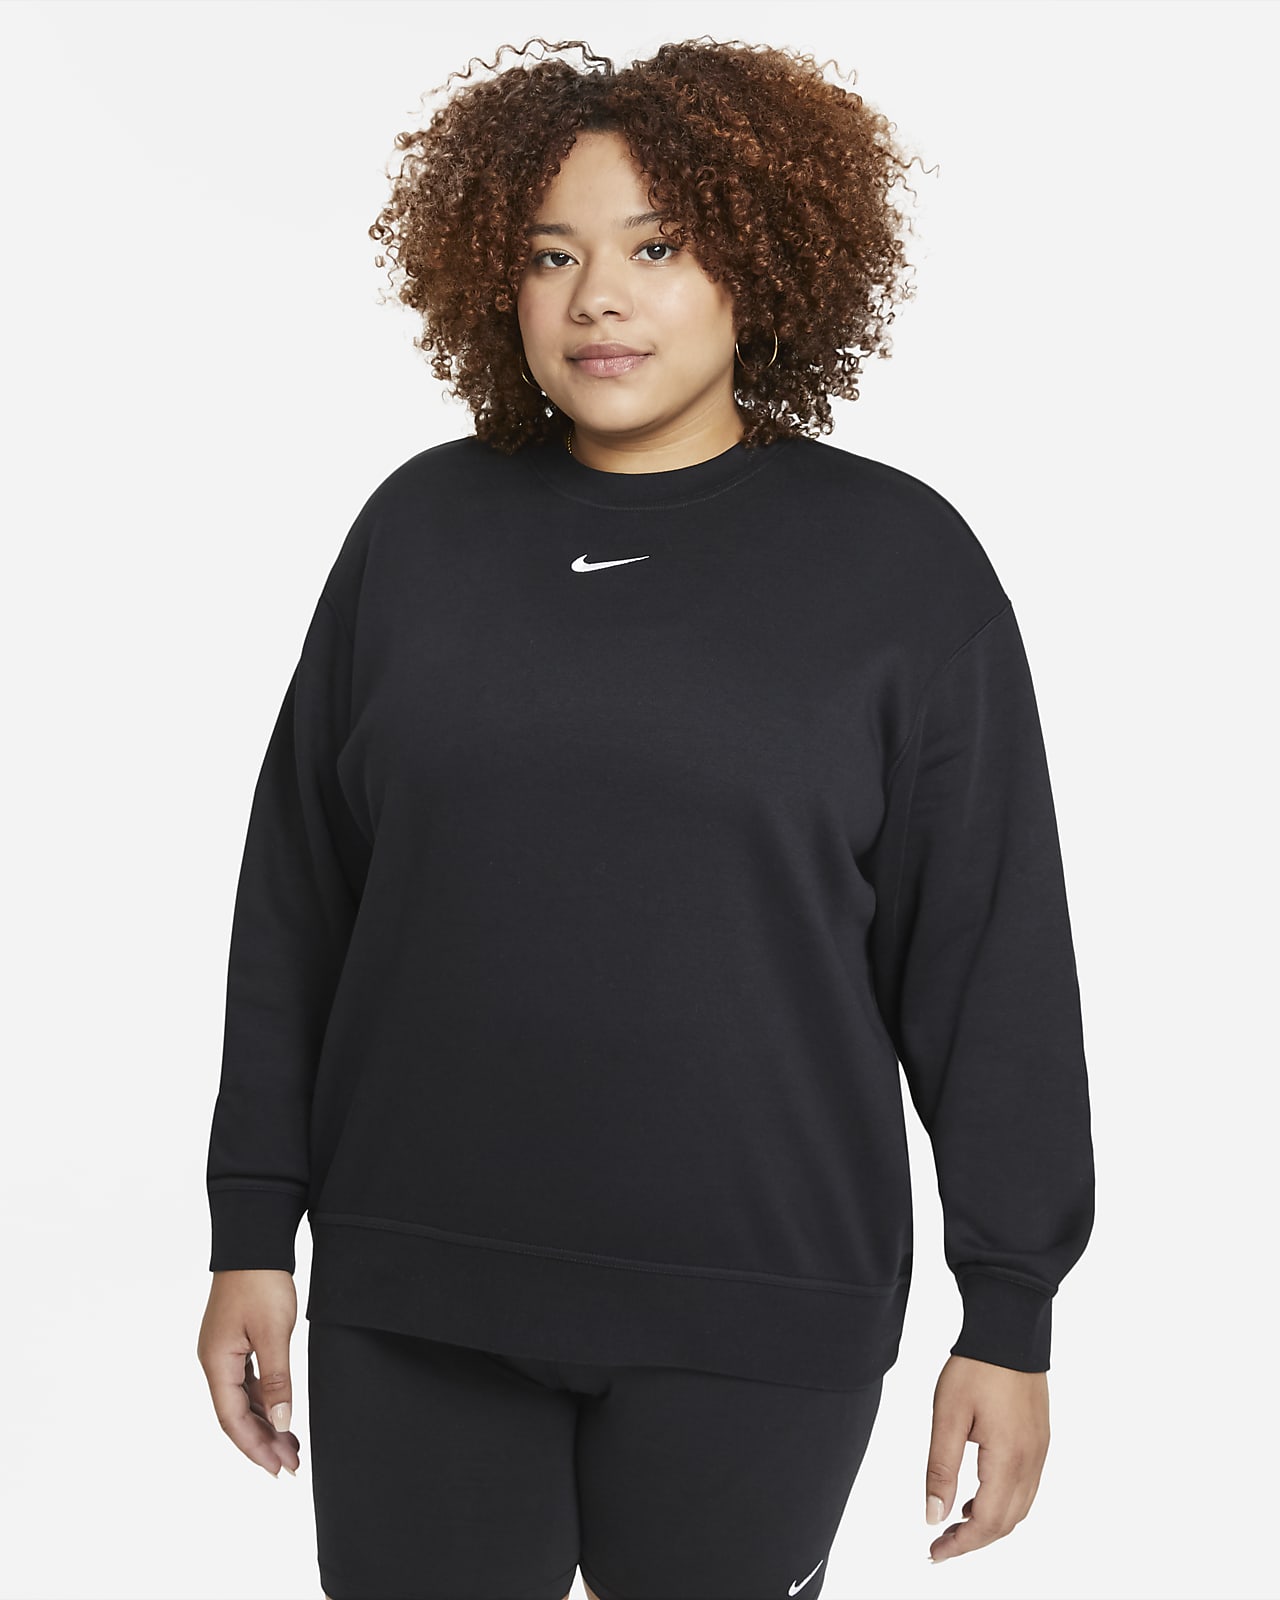 Haut en tissu Fleece Nike Sportswear Collection Essentials pour Femme (grande taille)